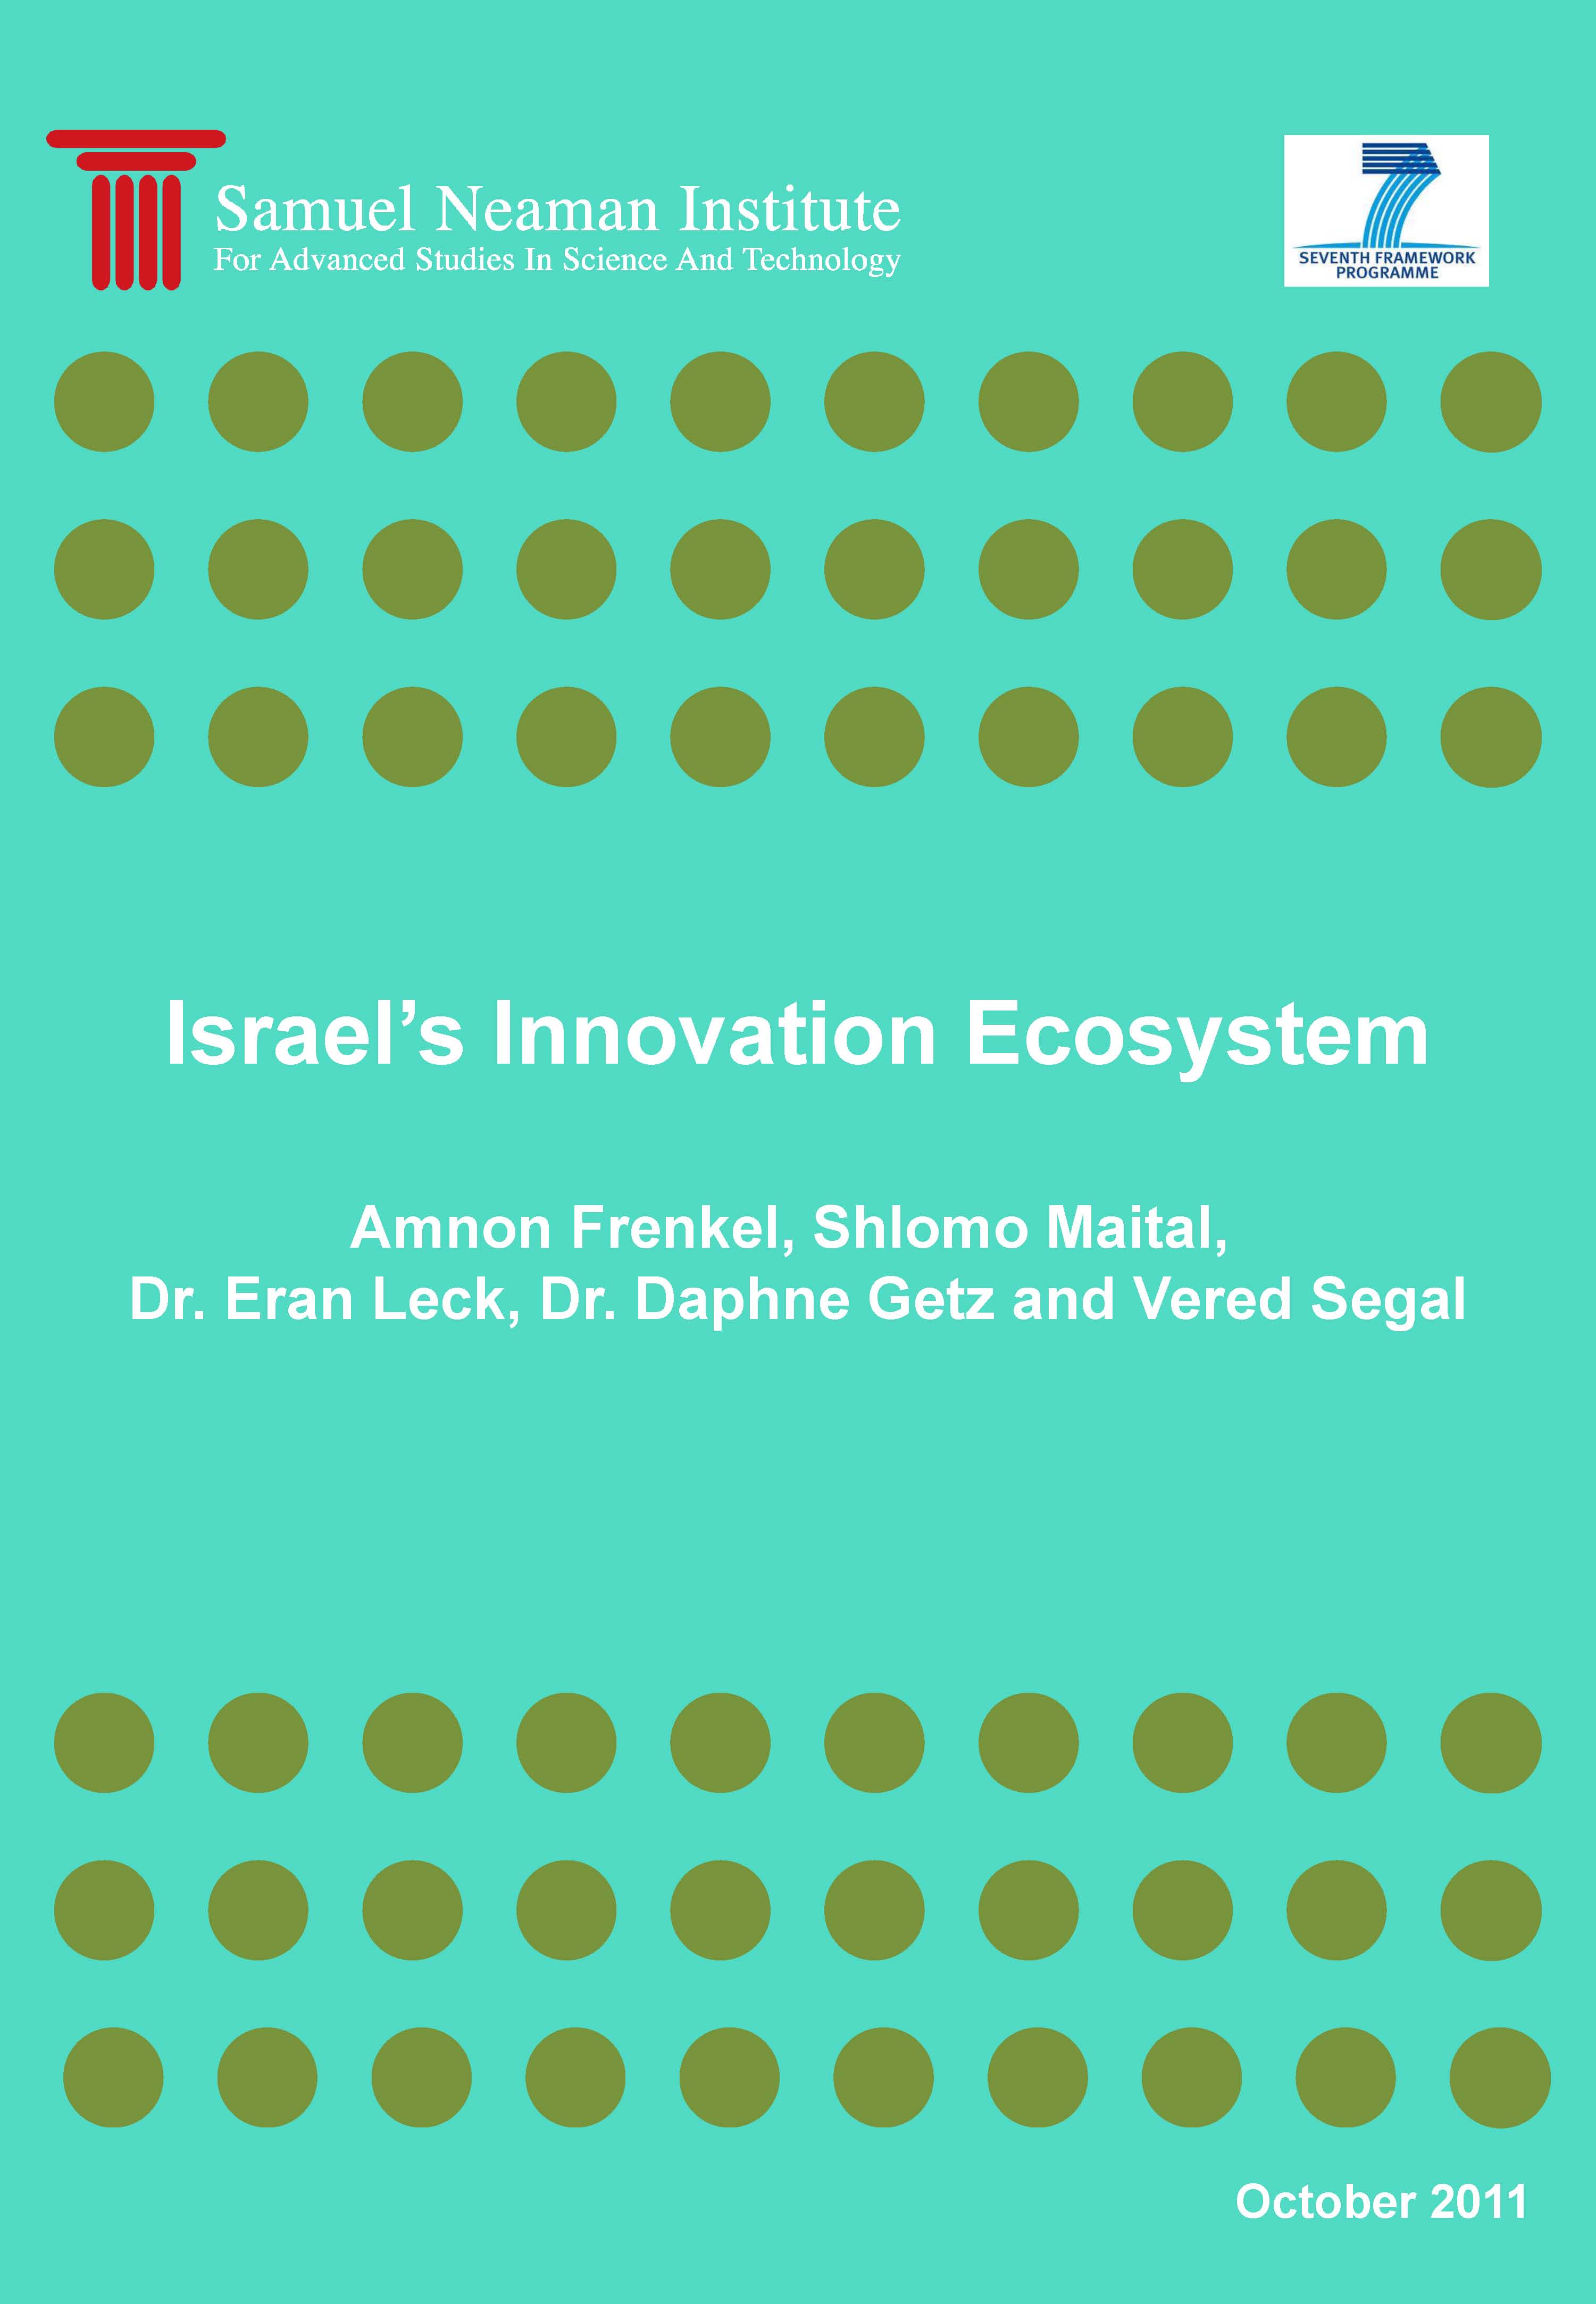 “Toward Mapping National Innovation Ecosystems:  Israel’s Innovation Ecosystem”